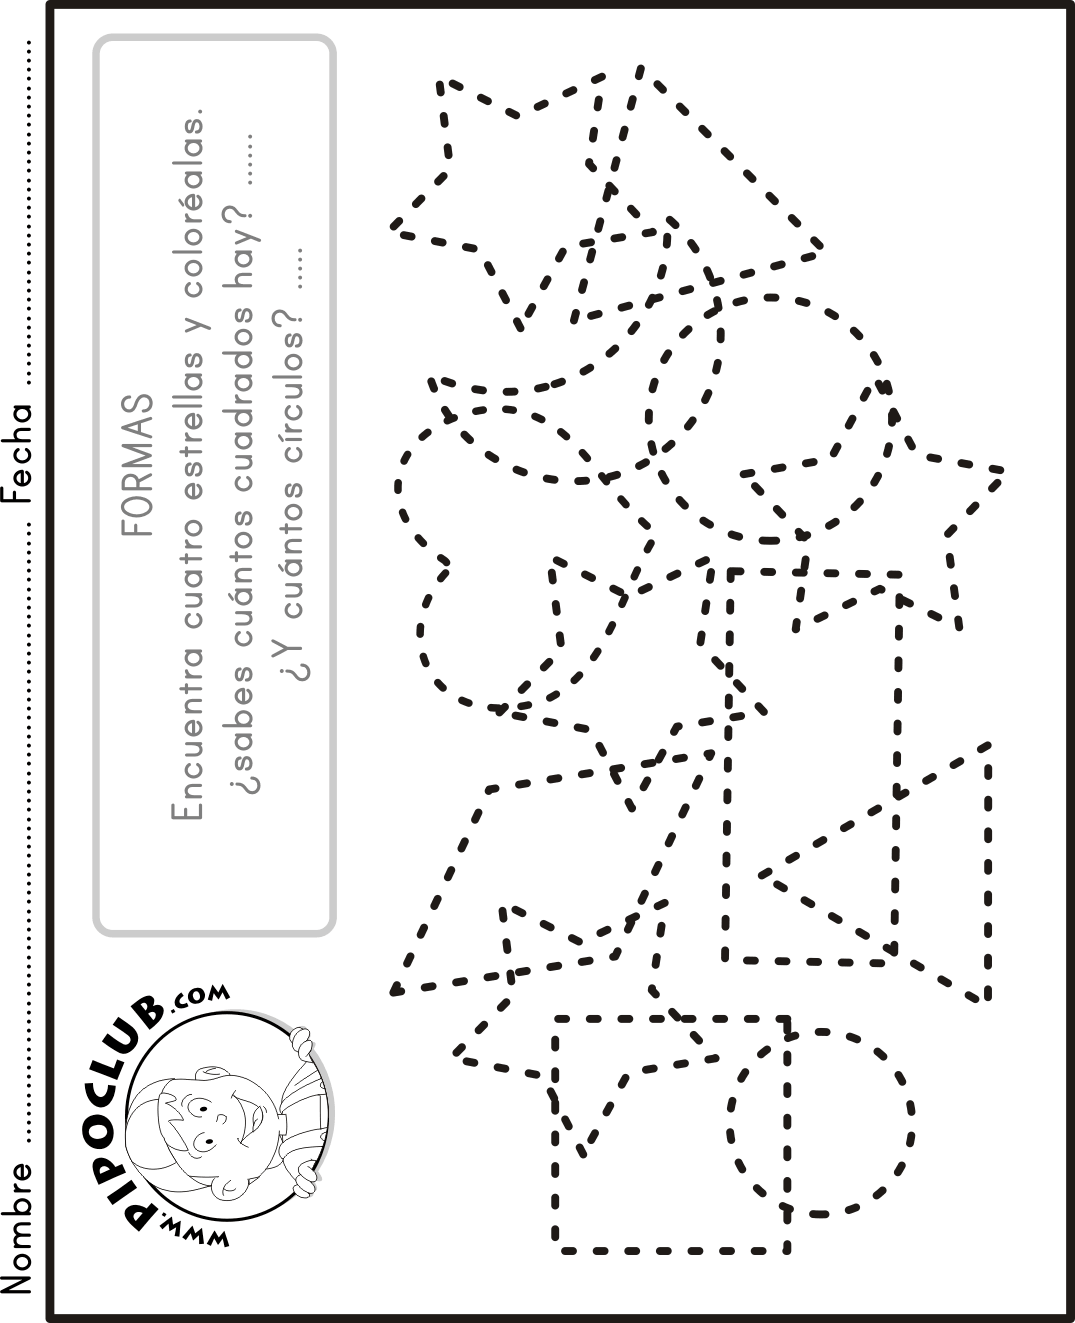 Actividades de matematicas para preescolares para imprimir - Imagui